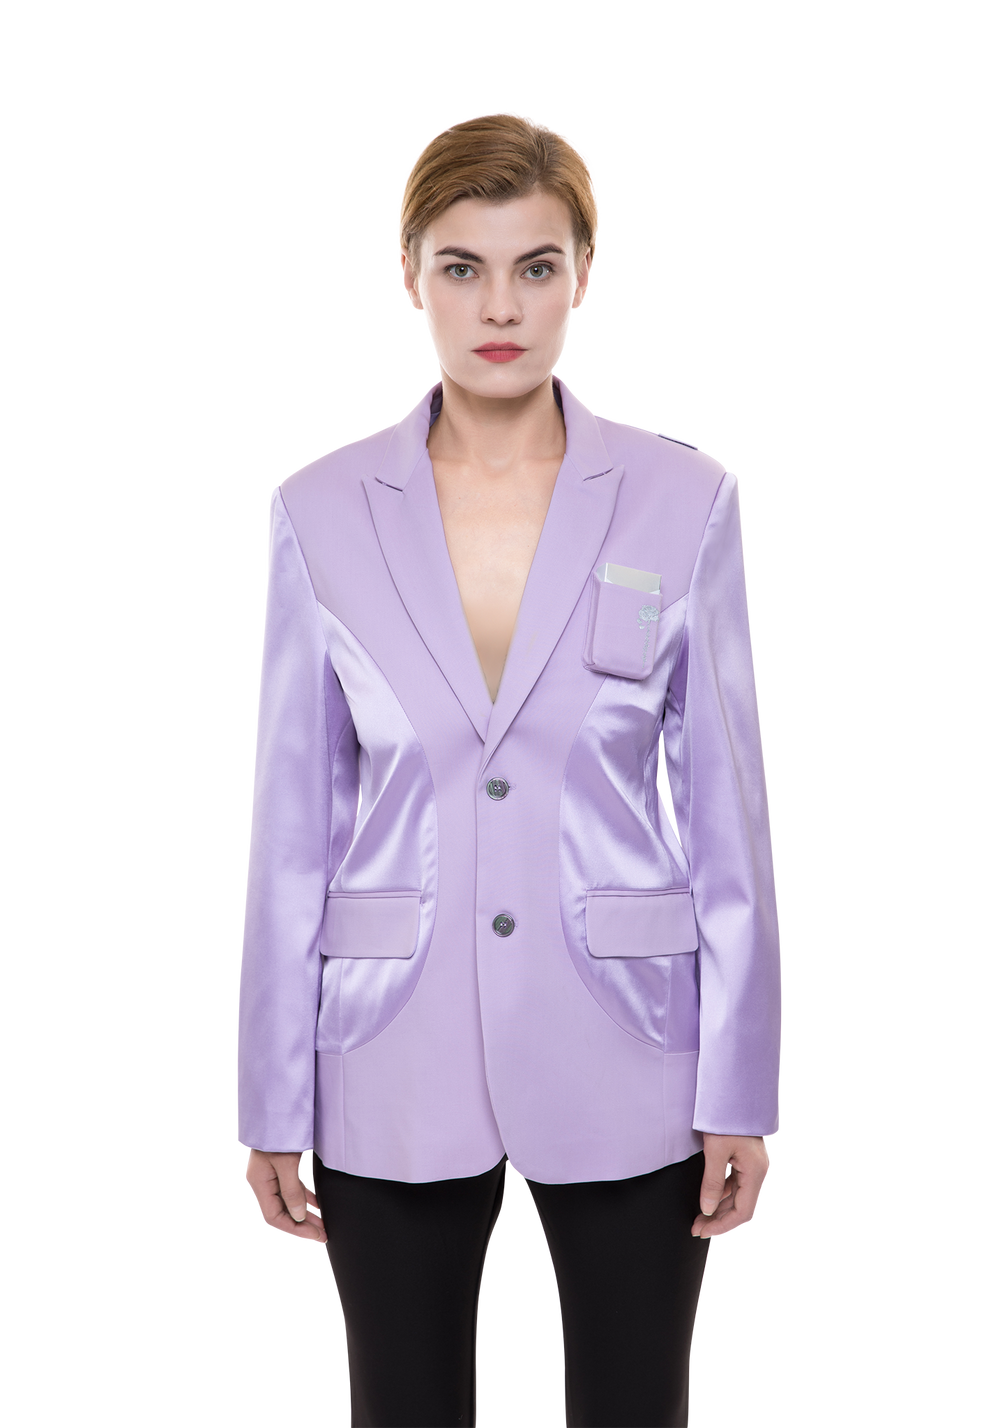 3M Rose Cigarette Case Suit - Pink - PSYLOS1